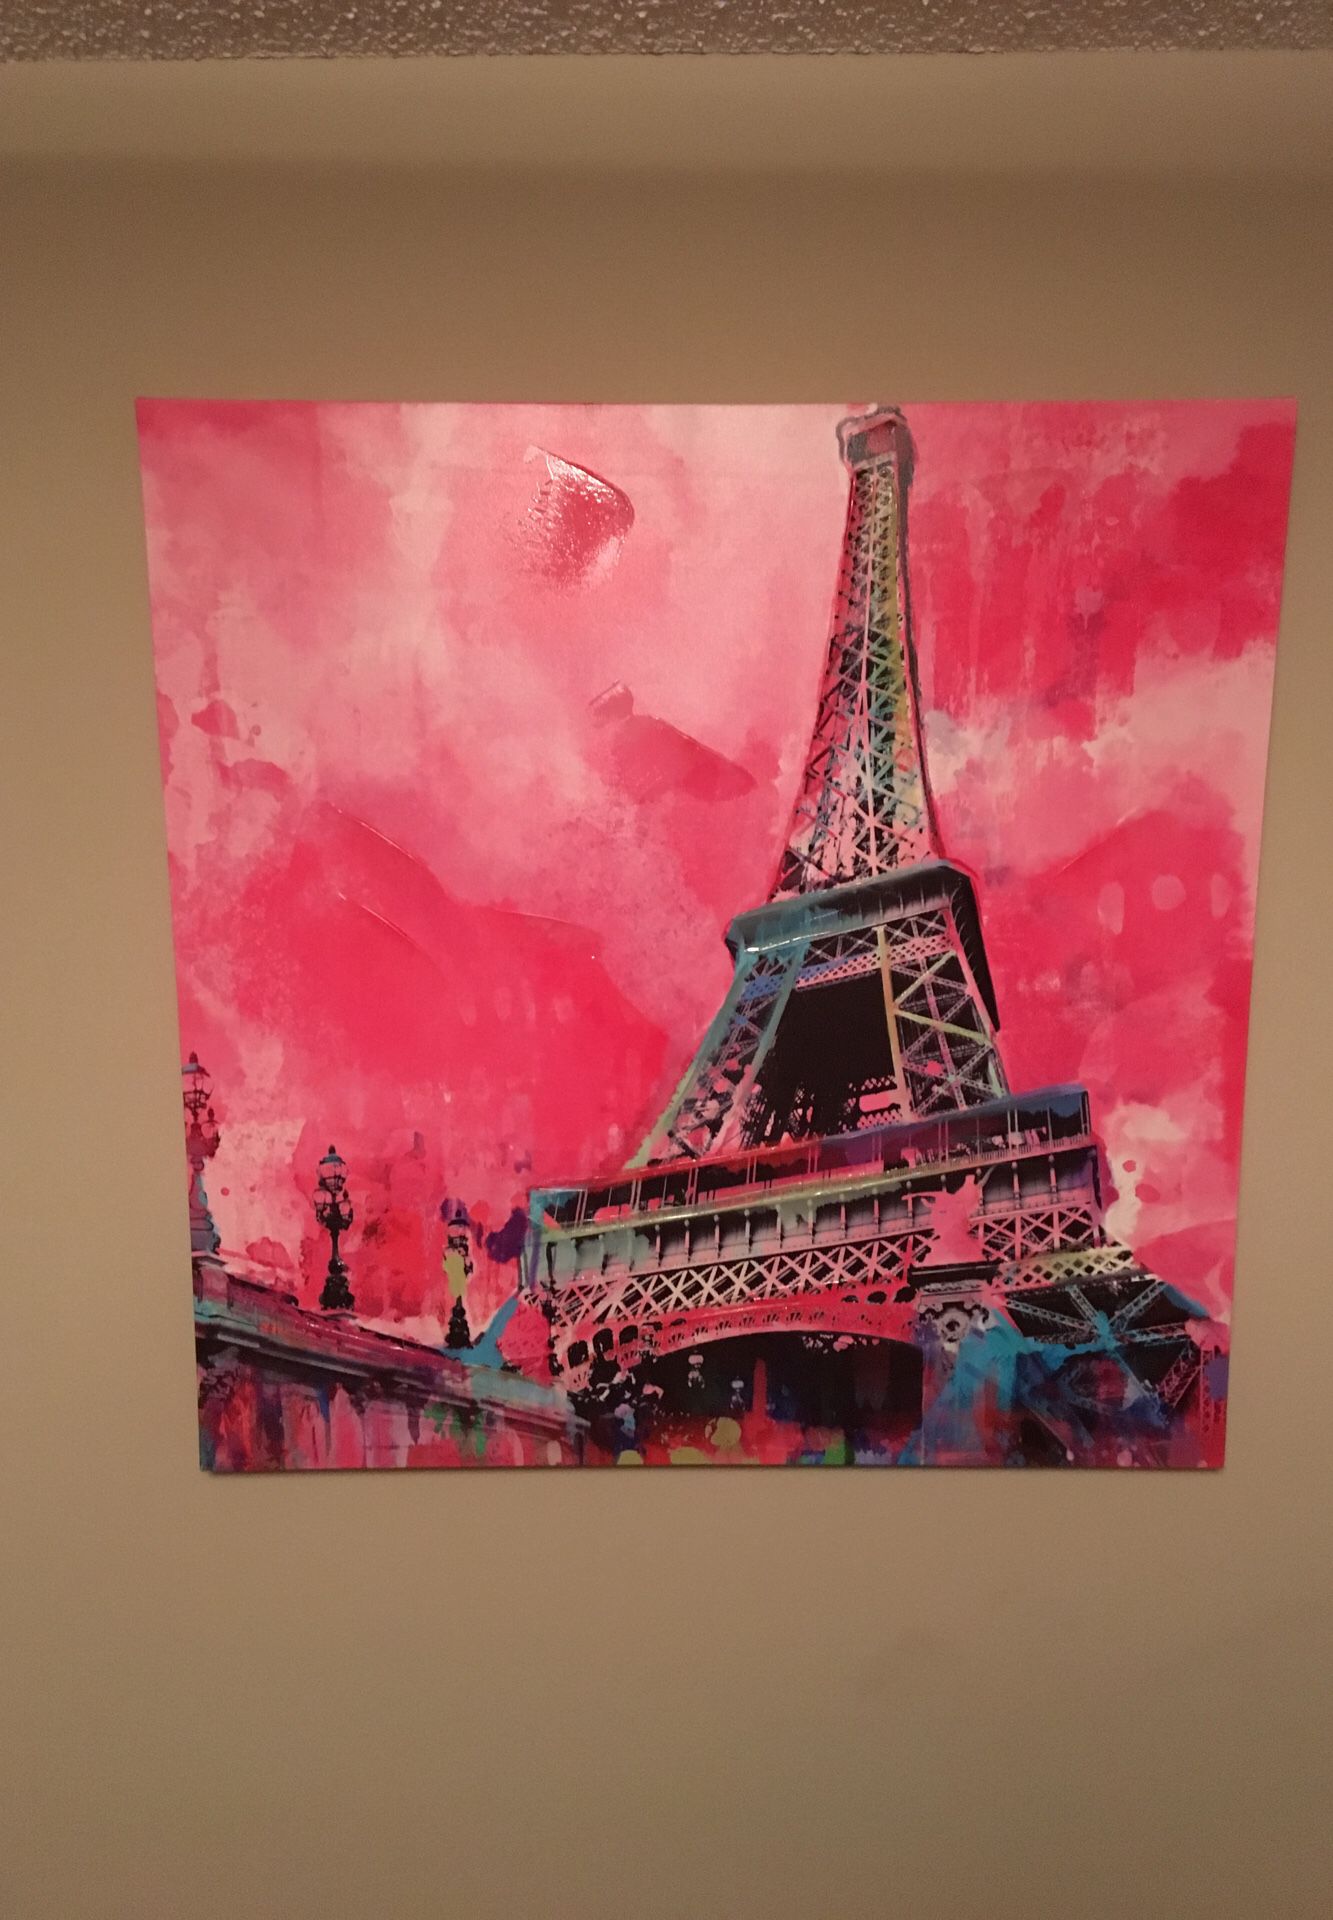 Paris Painting